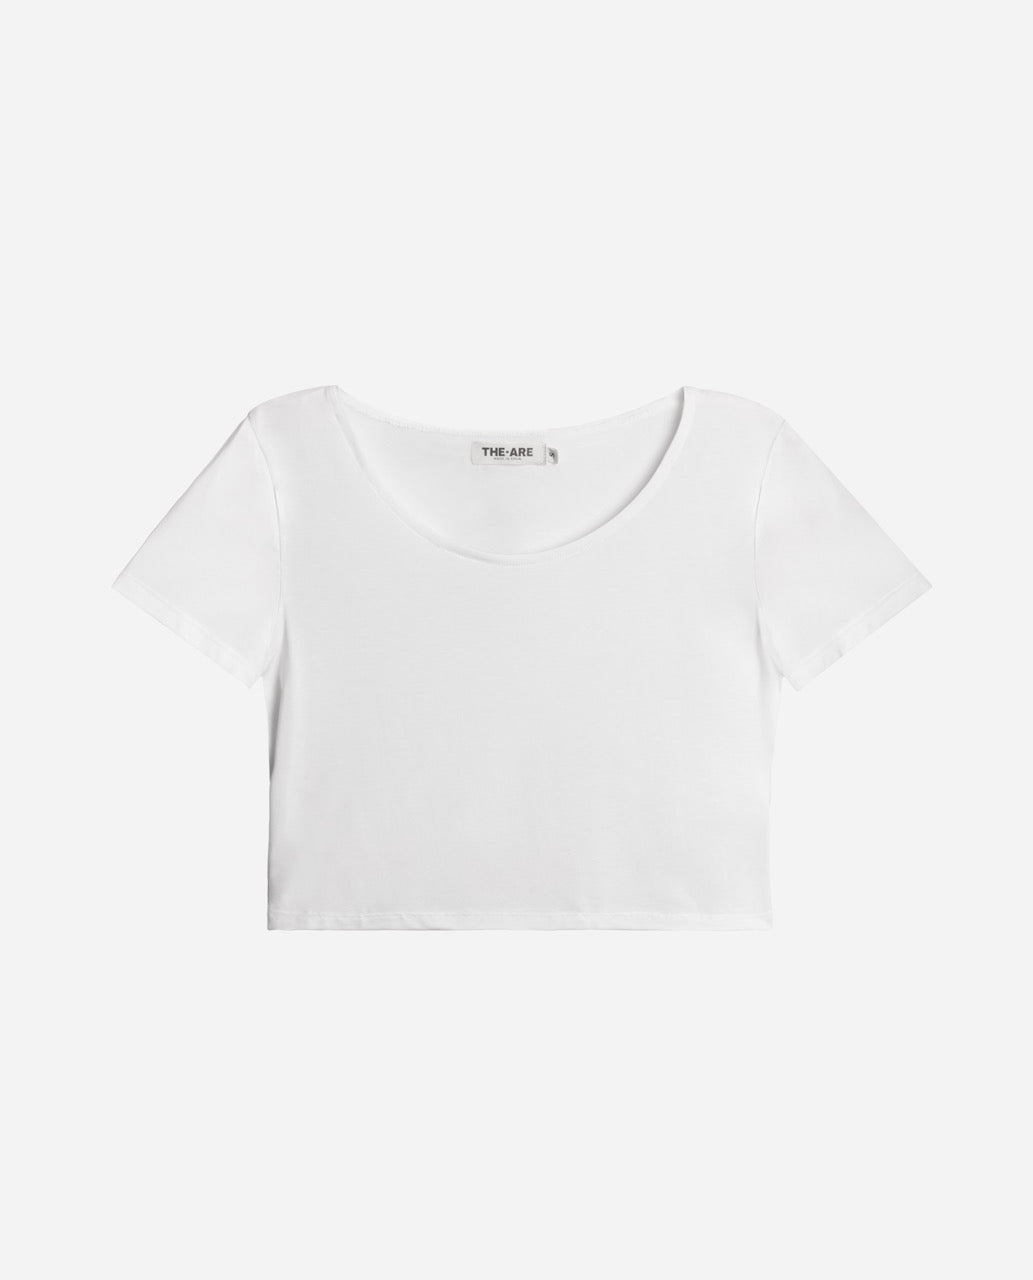 CAMISETA READY TO LIVE | Camiseta Crop Top Blanco de Mujer con Manga Corta | THE-ARE